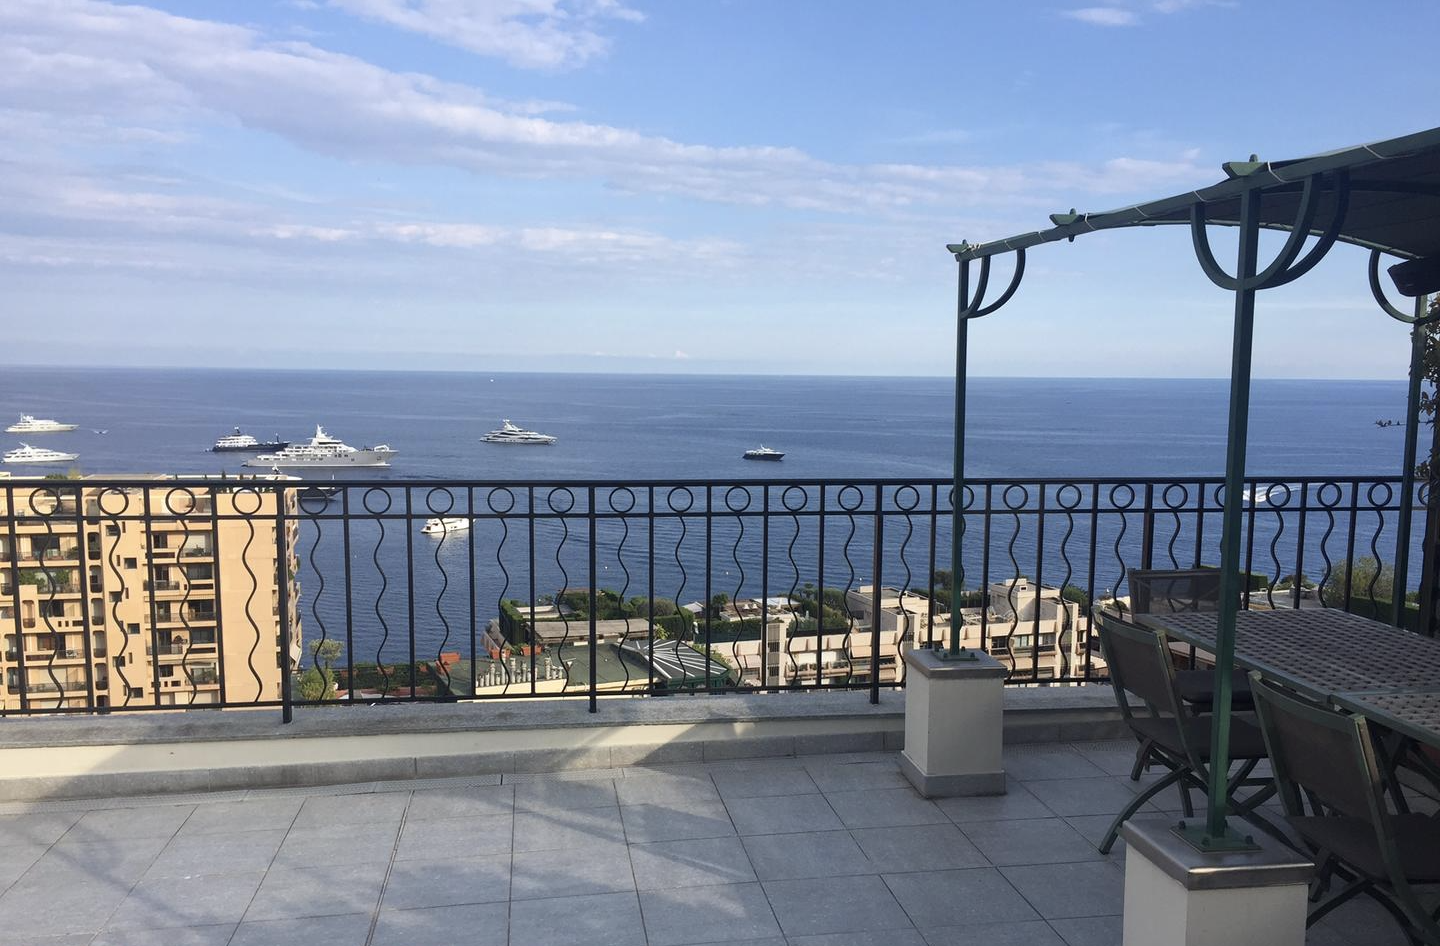 VERKOOP Appartement 3 SLPK Monaco - Penthouse / Dakterras (150m2)